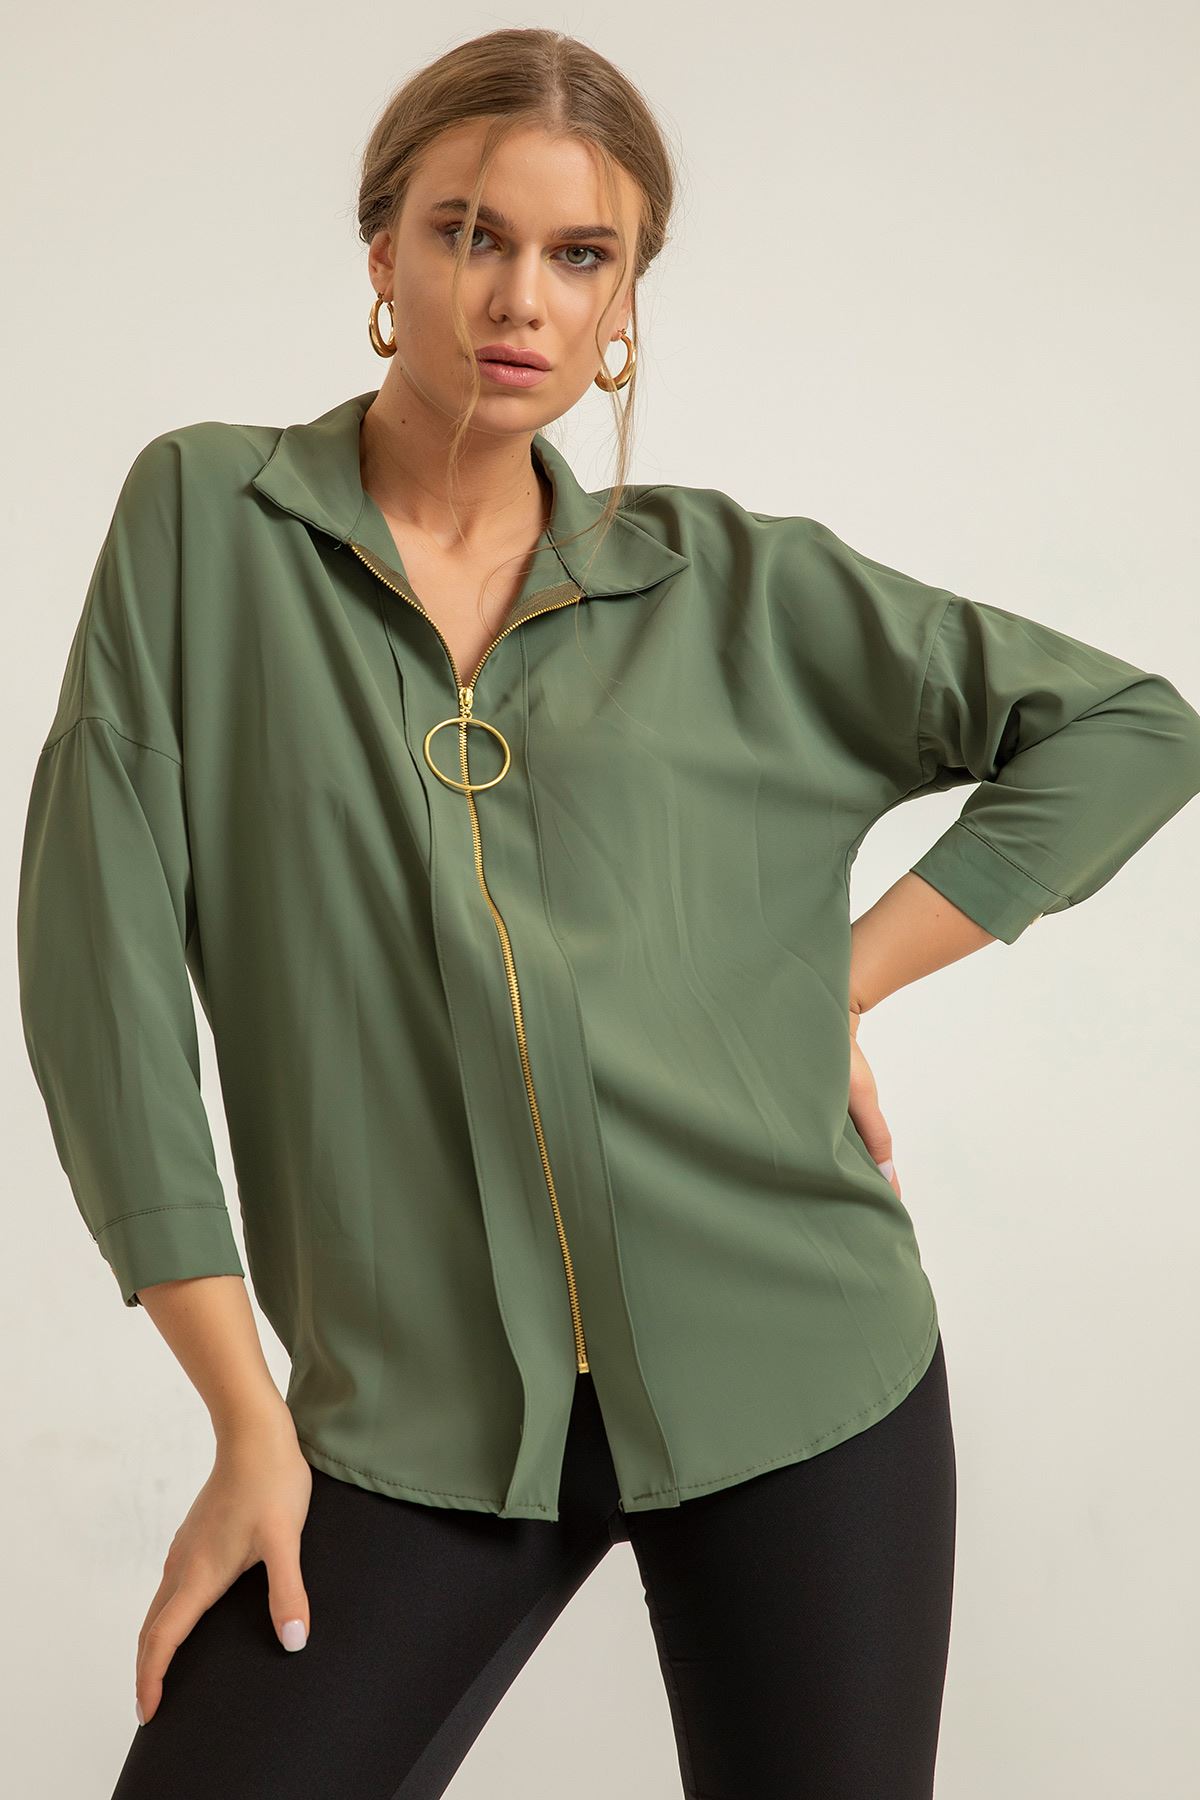 Jesica Fabric Long Sleeve Hip Height Wide Zip Front Women'S Shirt - Khaki 